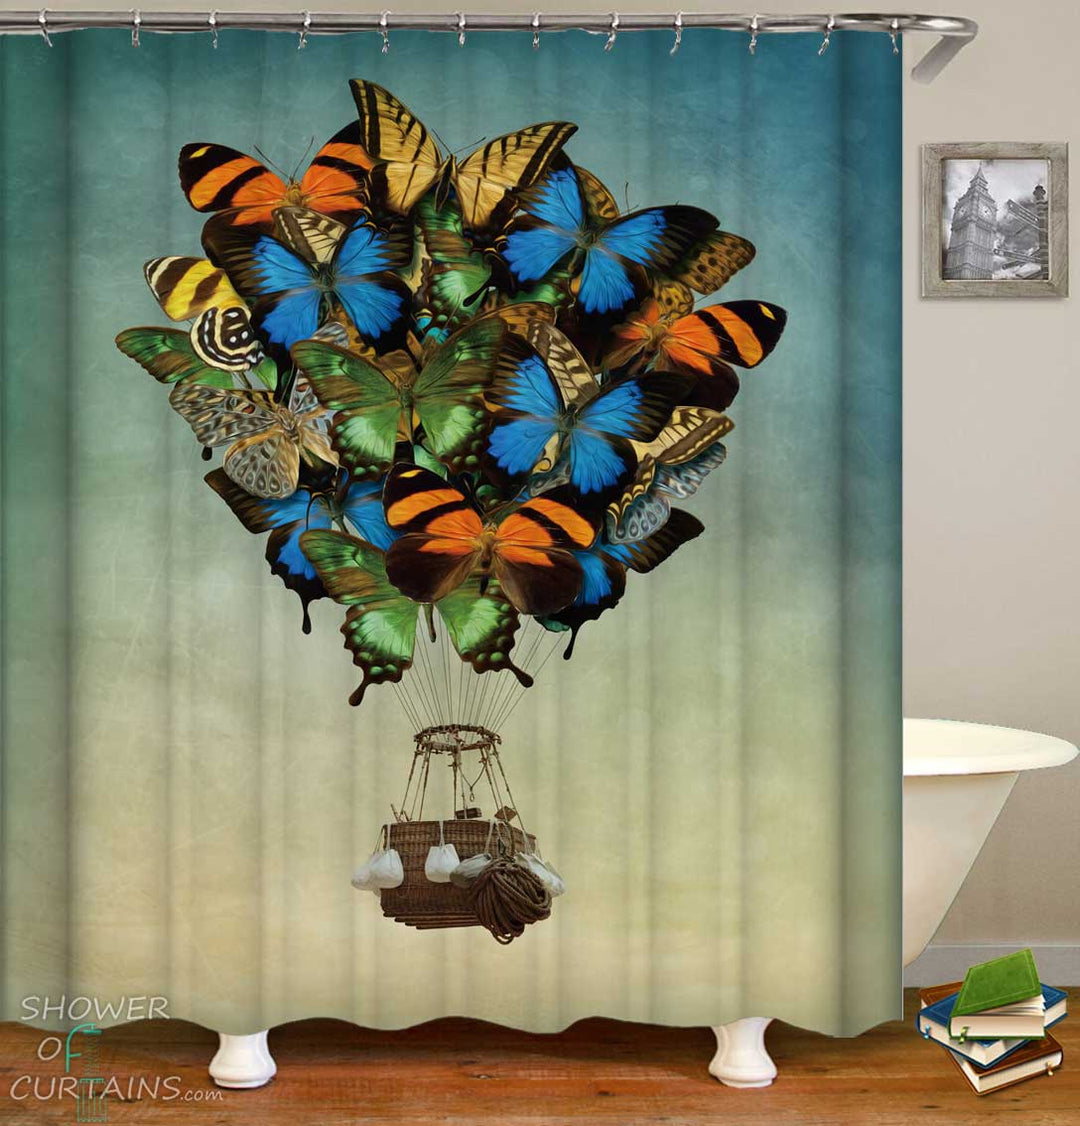 Shower Curtains with Butterflies Hot Air Balloon